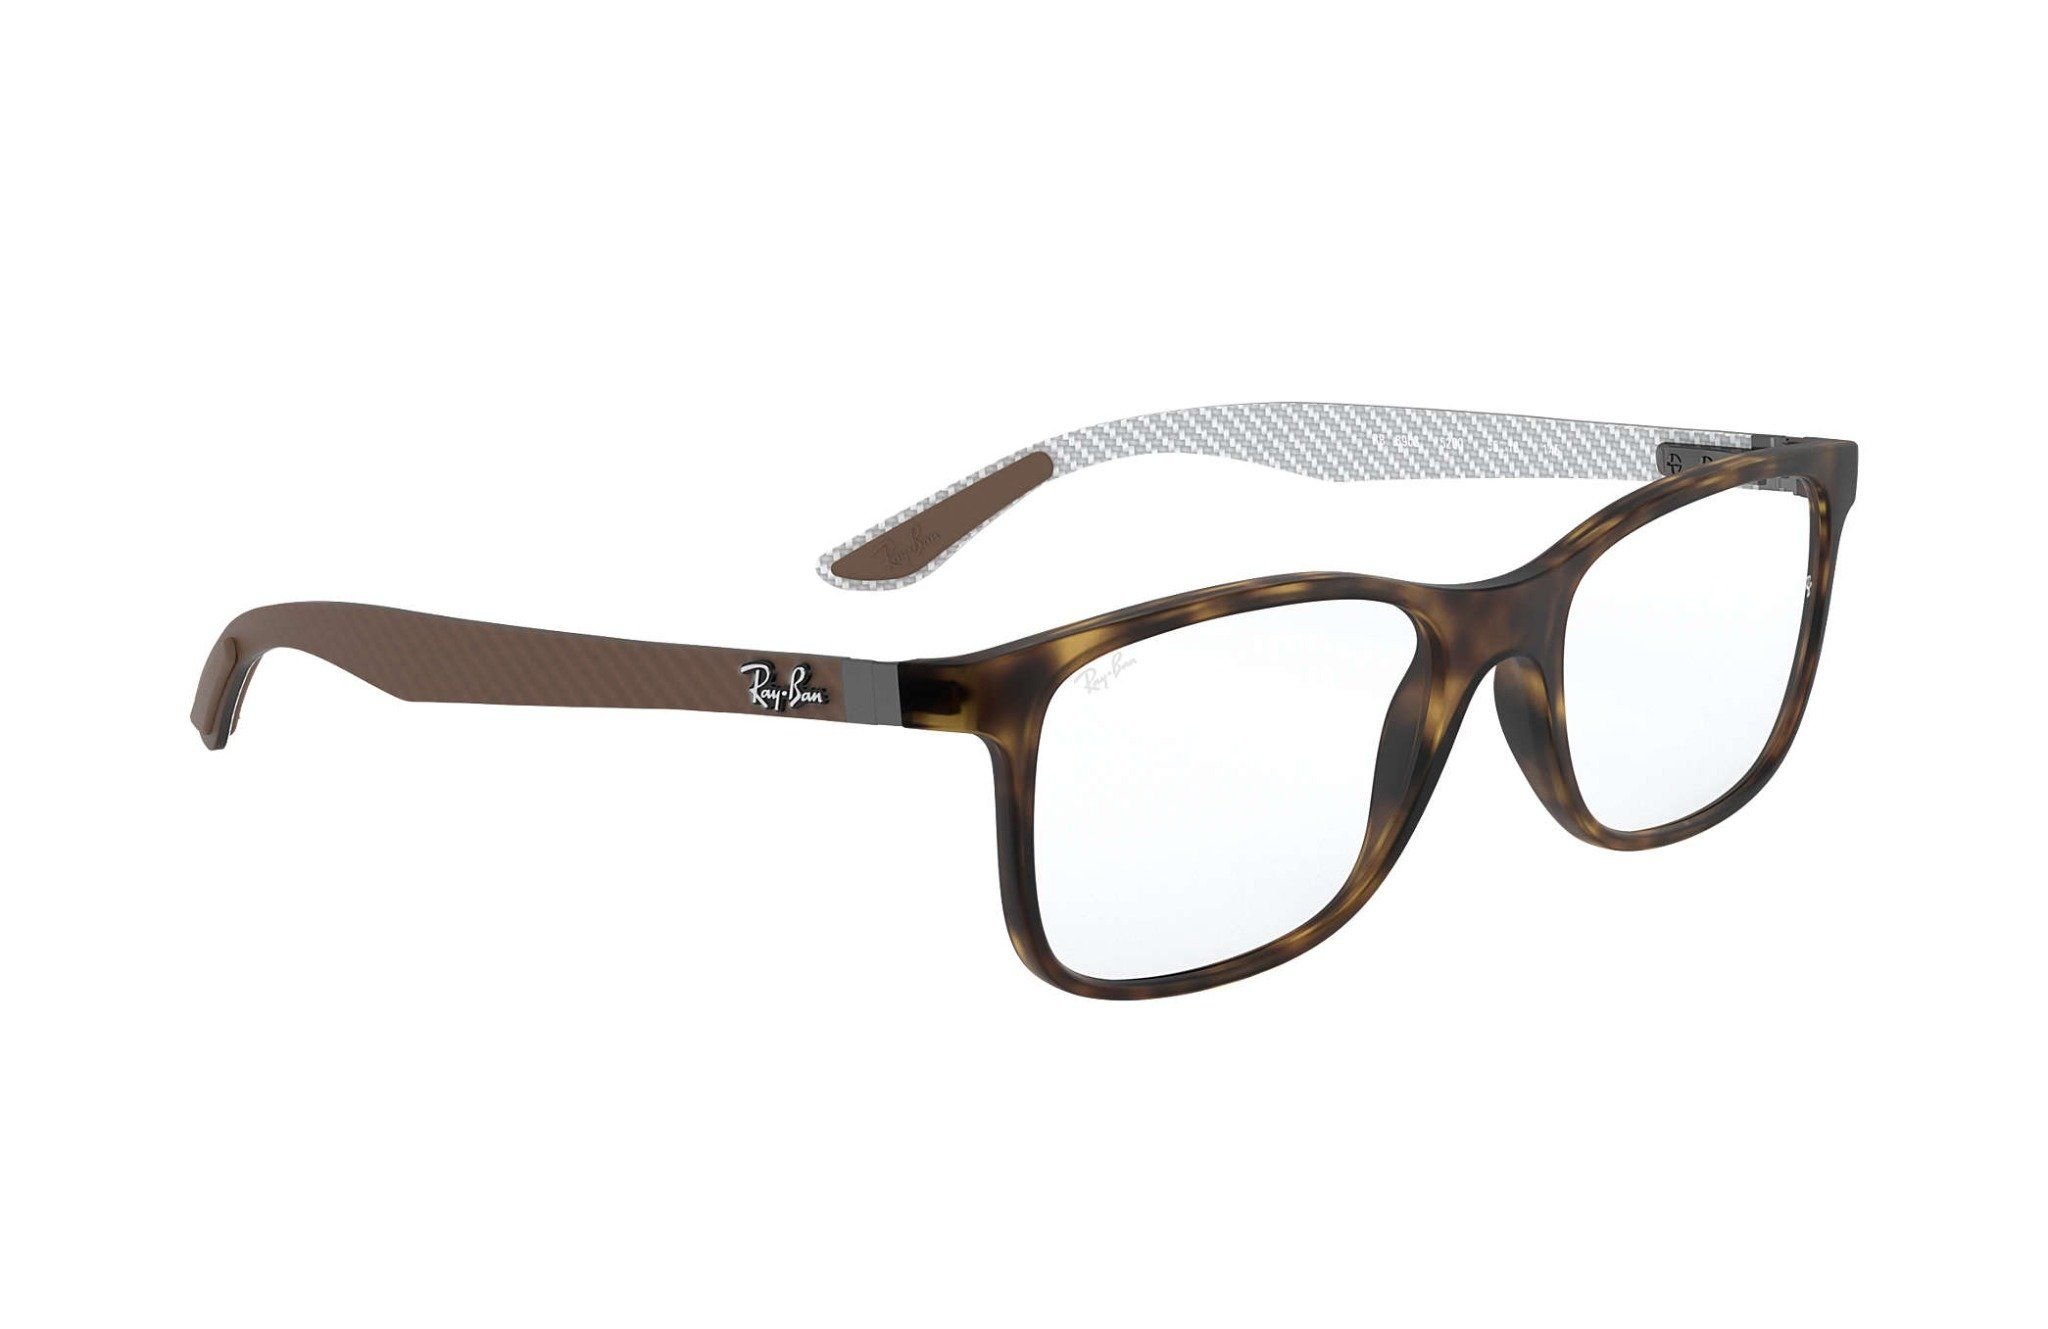  Ray Ban RB8903 5200 carbon fibre eyeglasses 